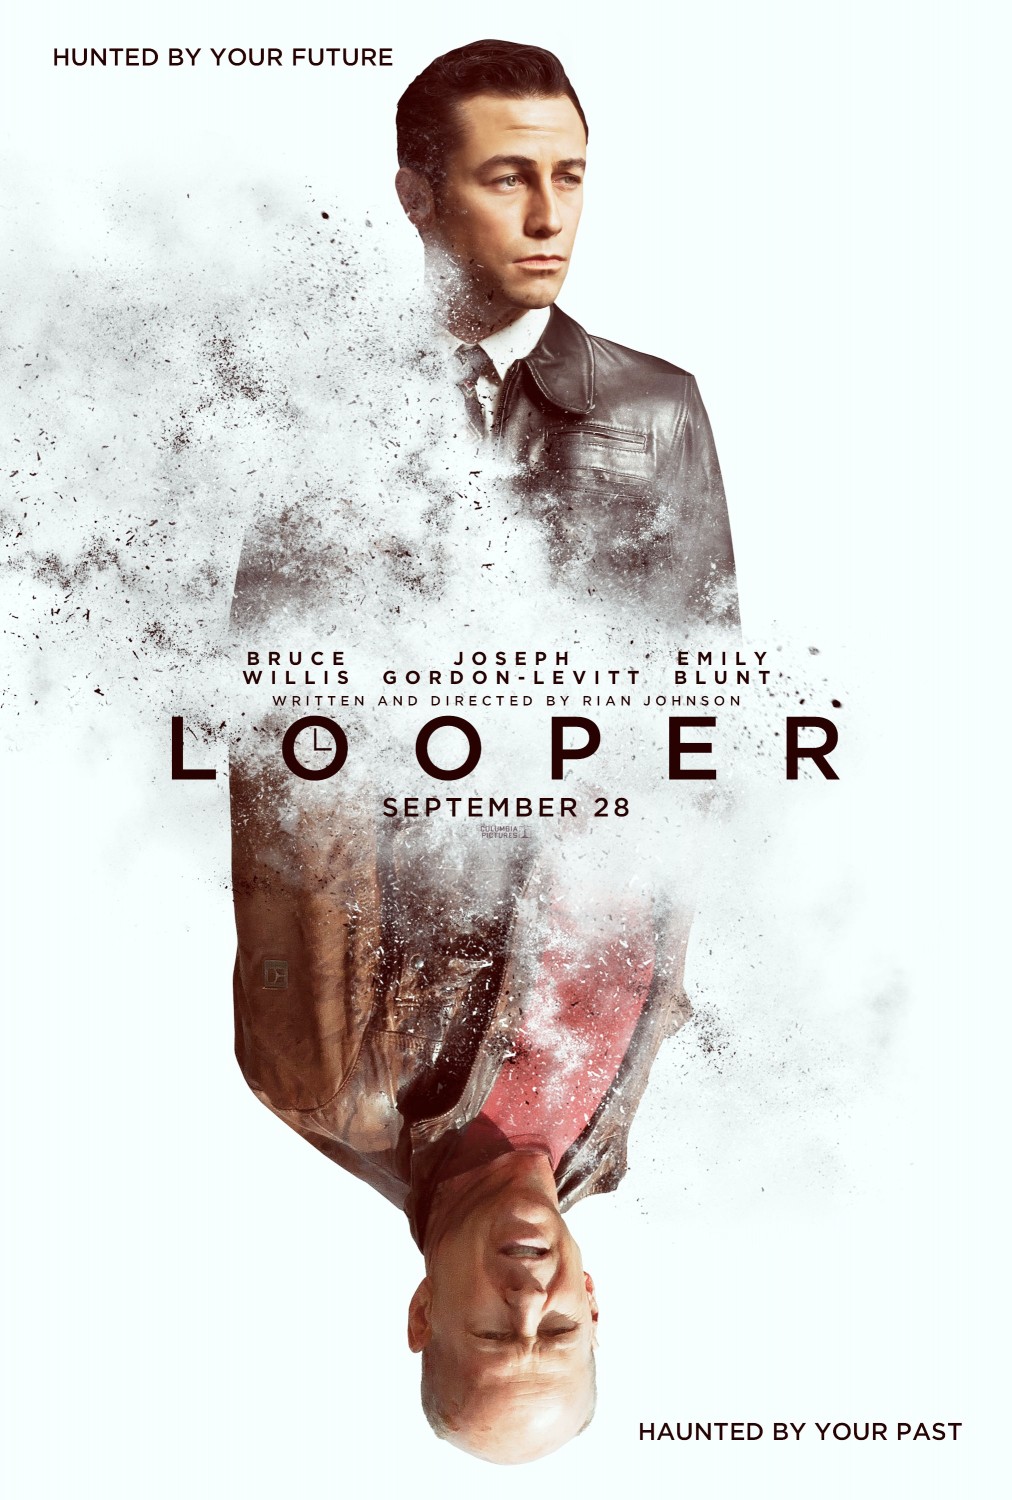 "Looper" - zwiastun filmu akcji z Brucem Willisem